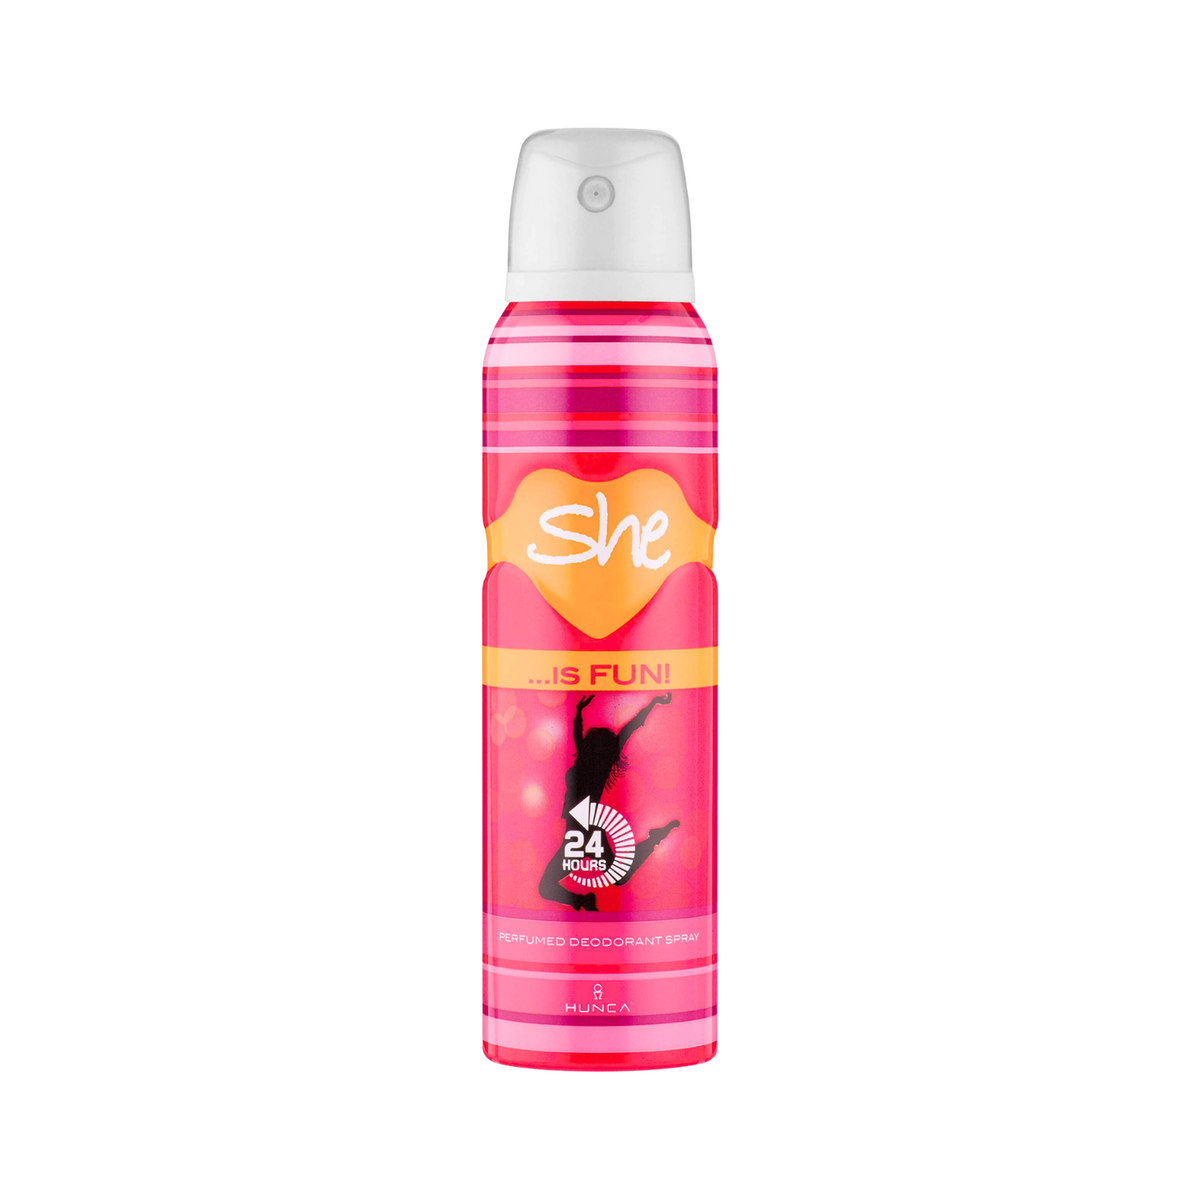 she-is-fun-deodorant-body-spray-for-women-150ml